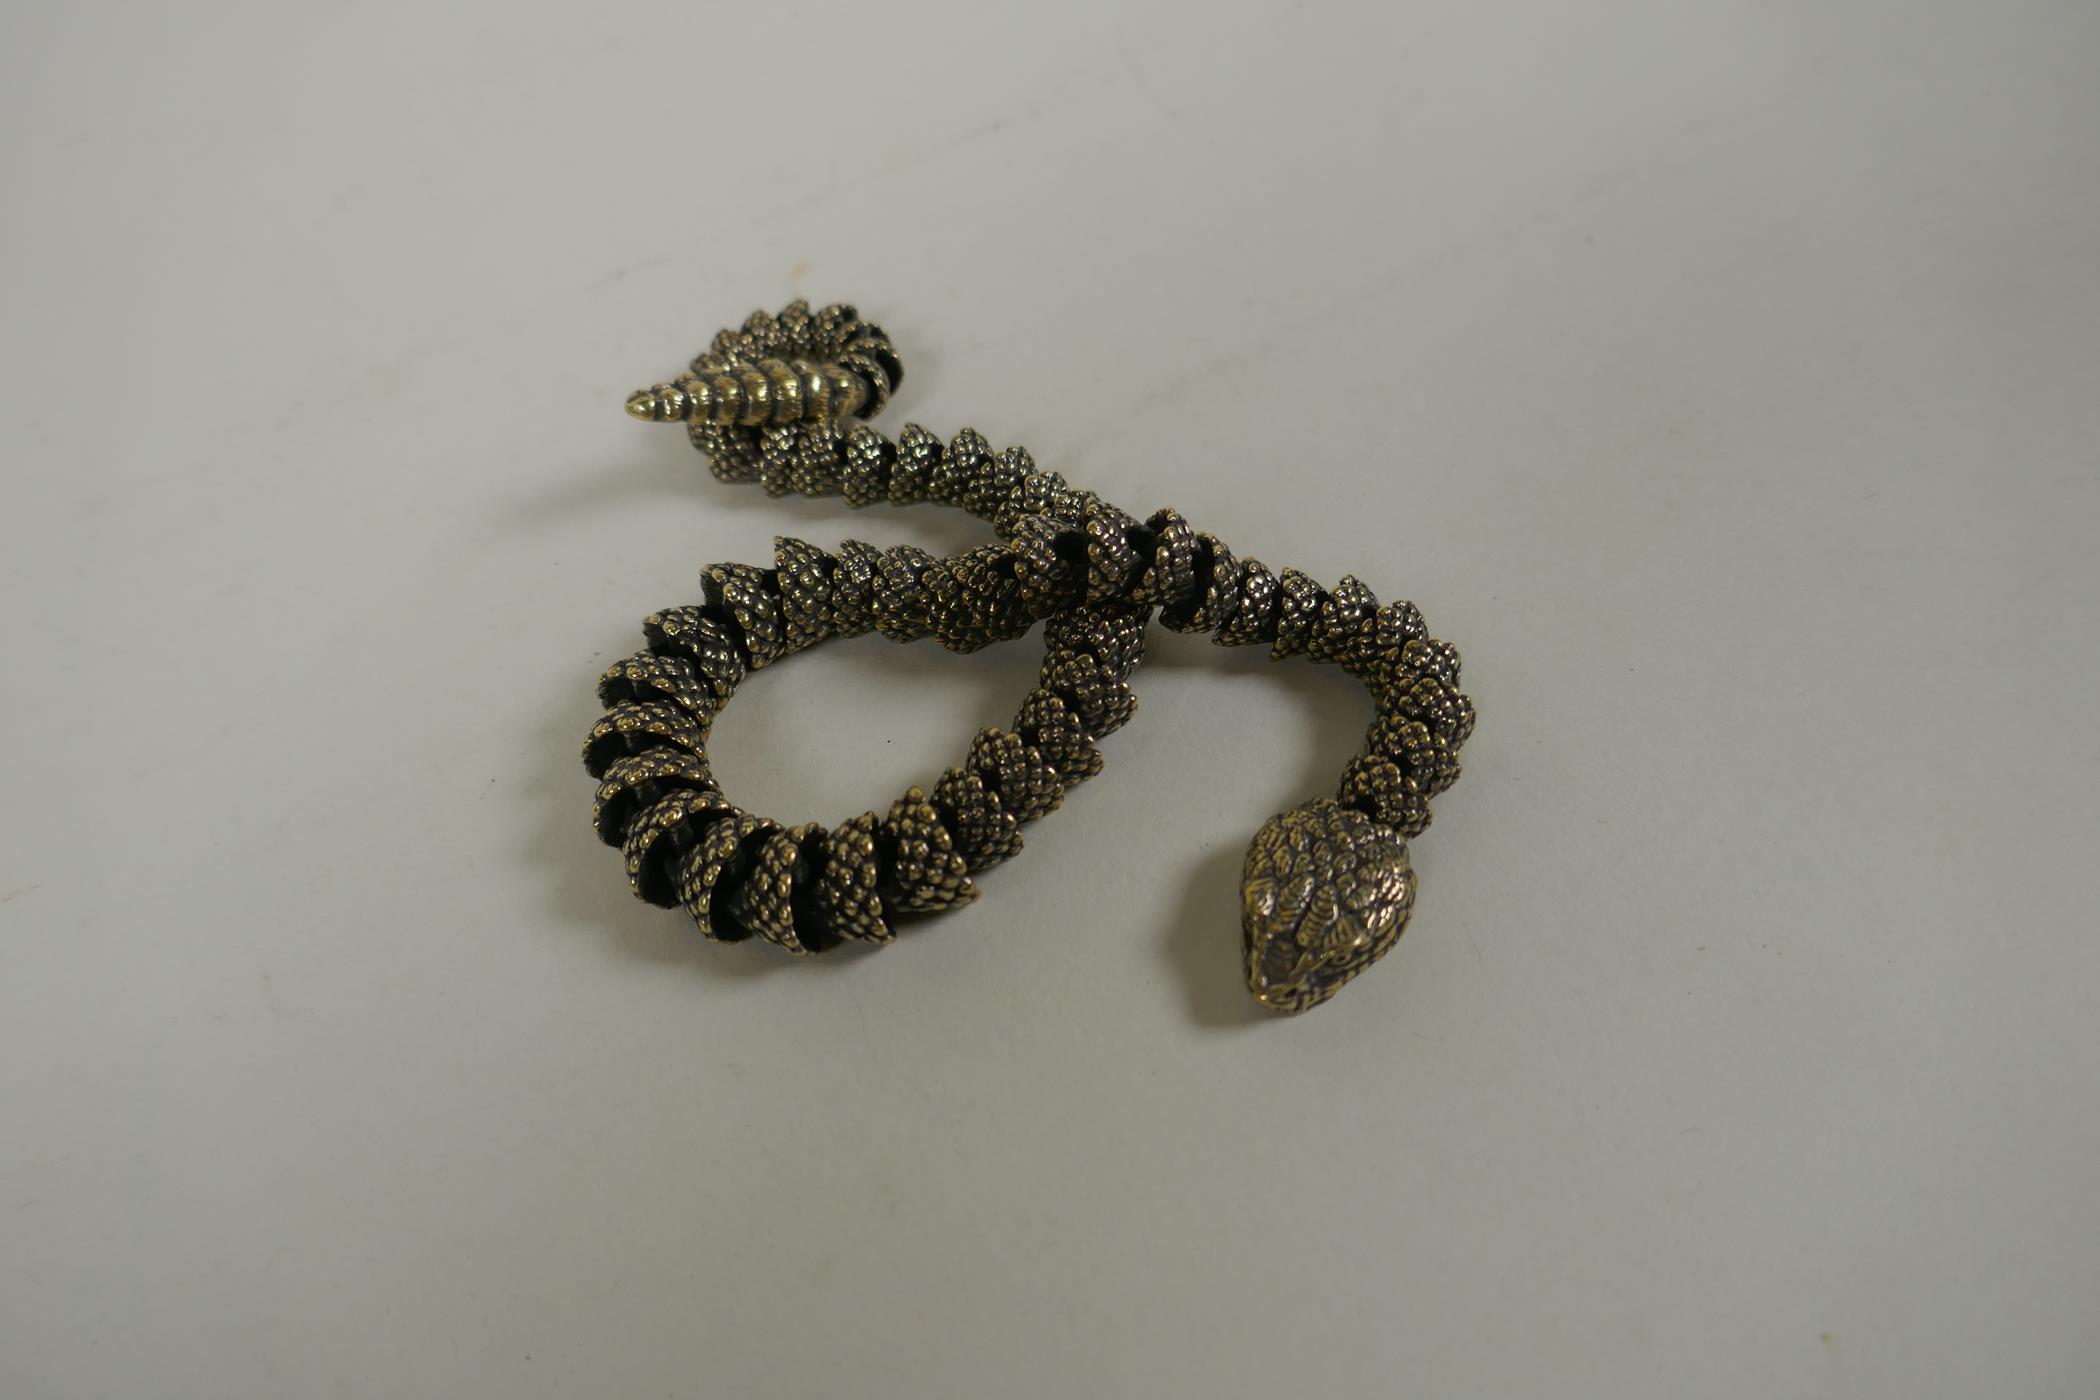 A Japanese Jizai style articulated polished bronze okimono snake, 40cm long - Image 6 of 6